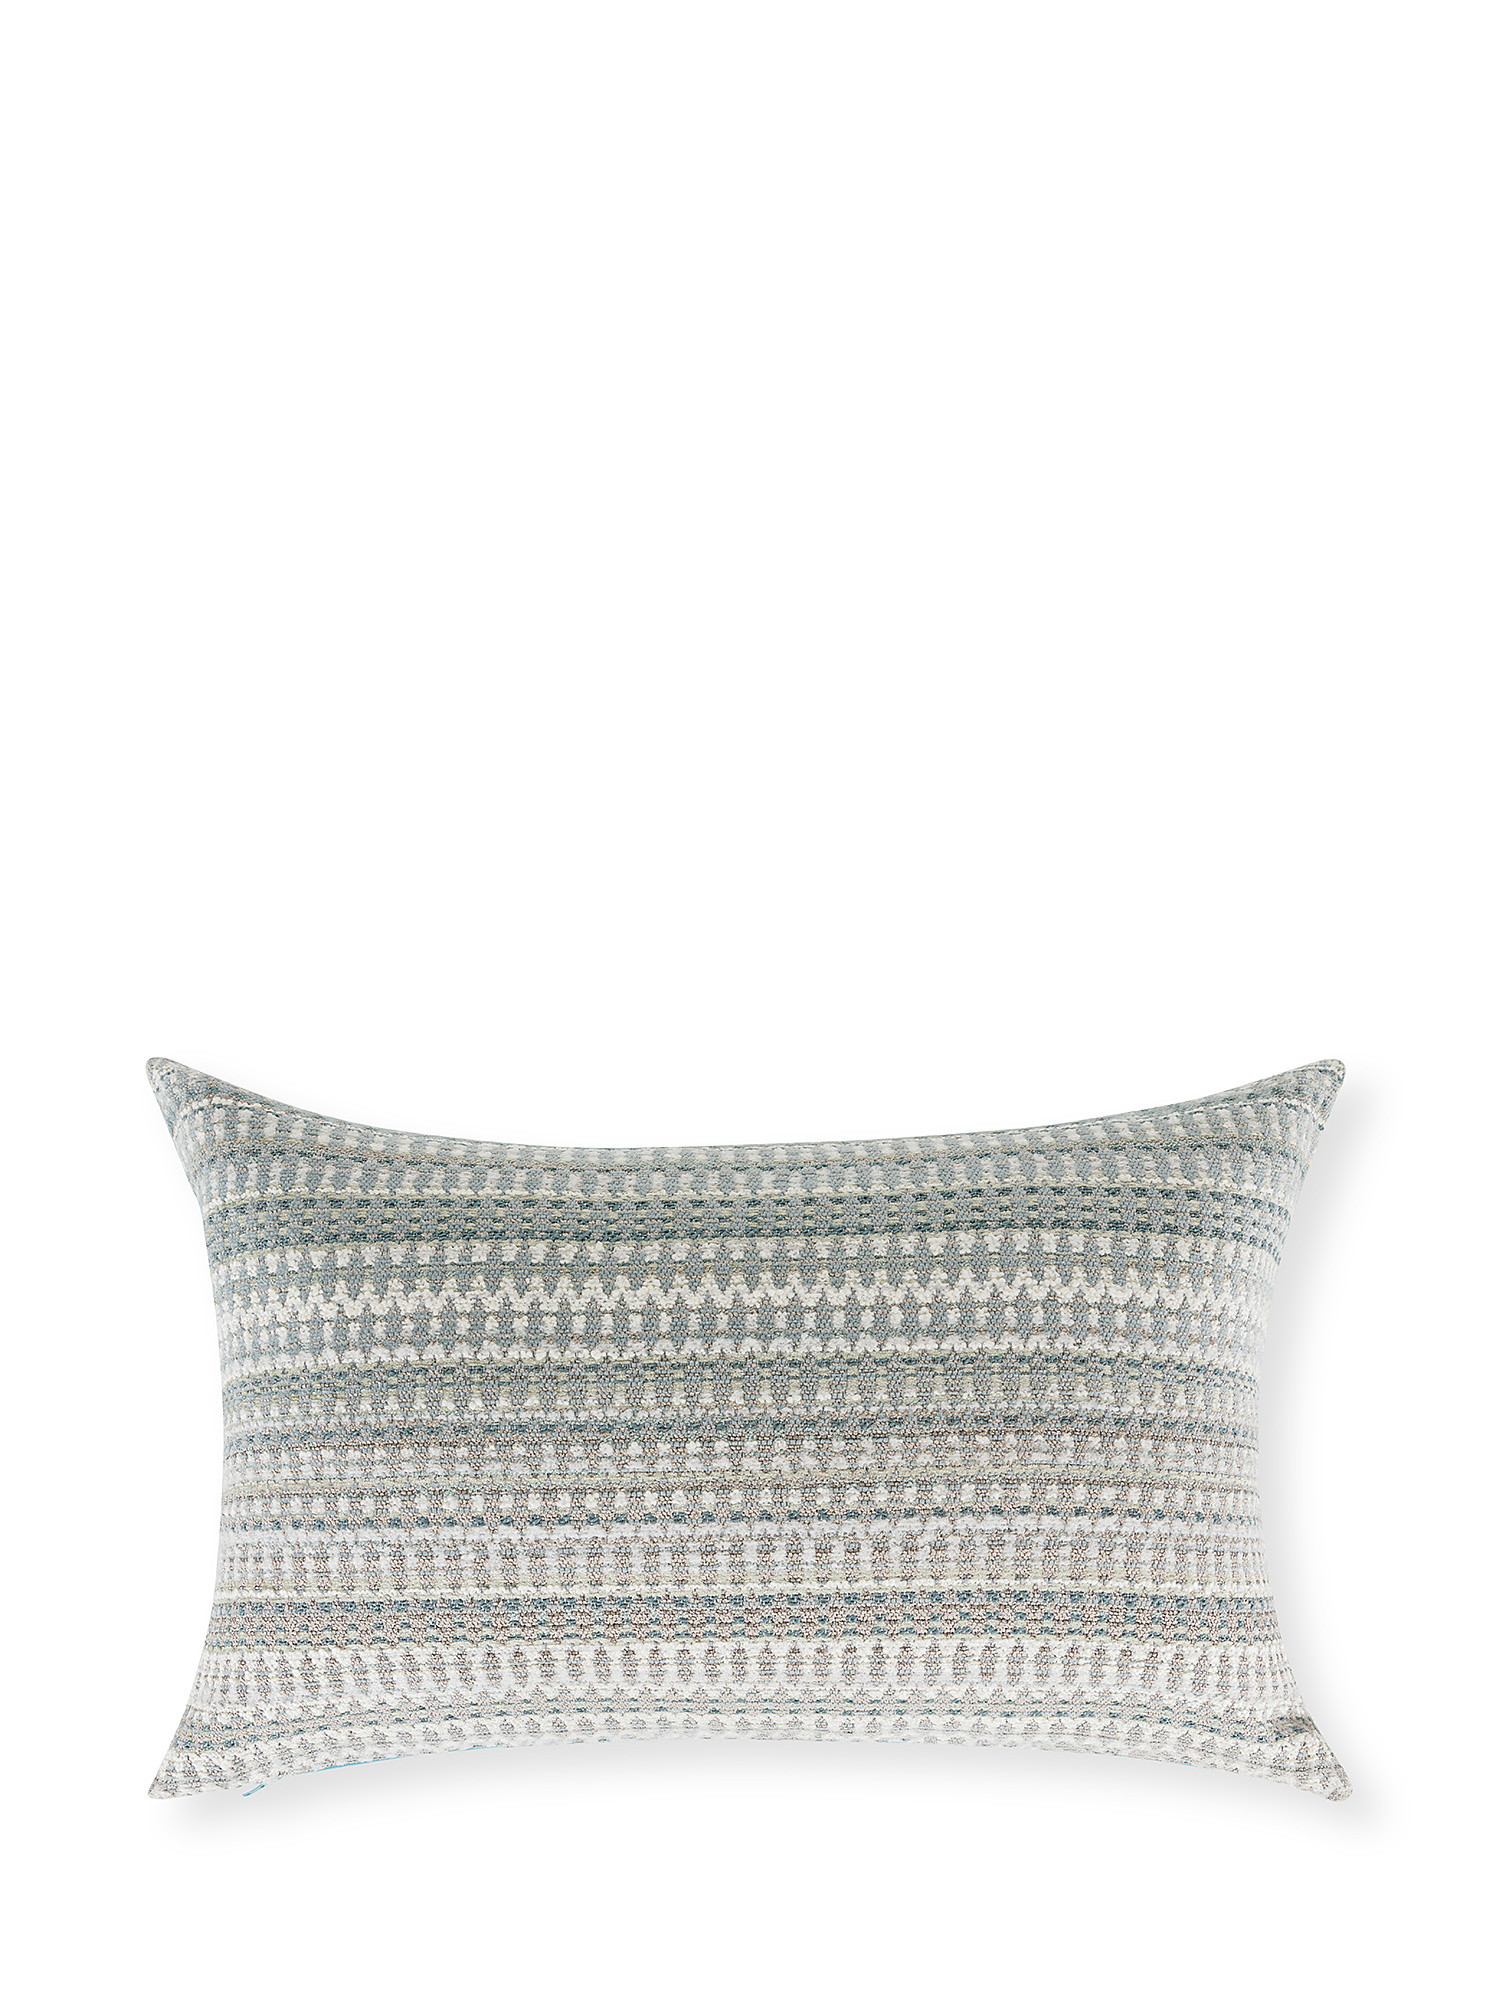 Jacquard cushion with geometric pattern 35x55cm, Grey, large image number 0